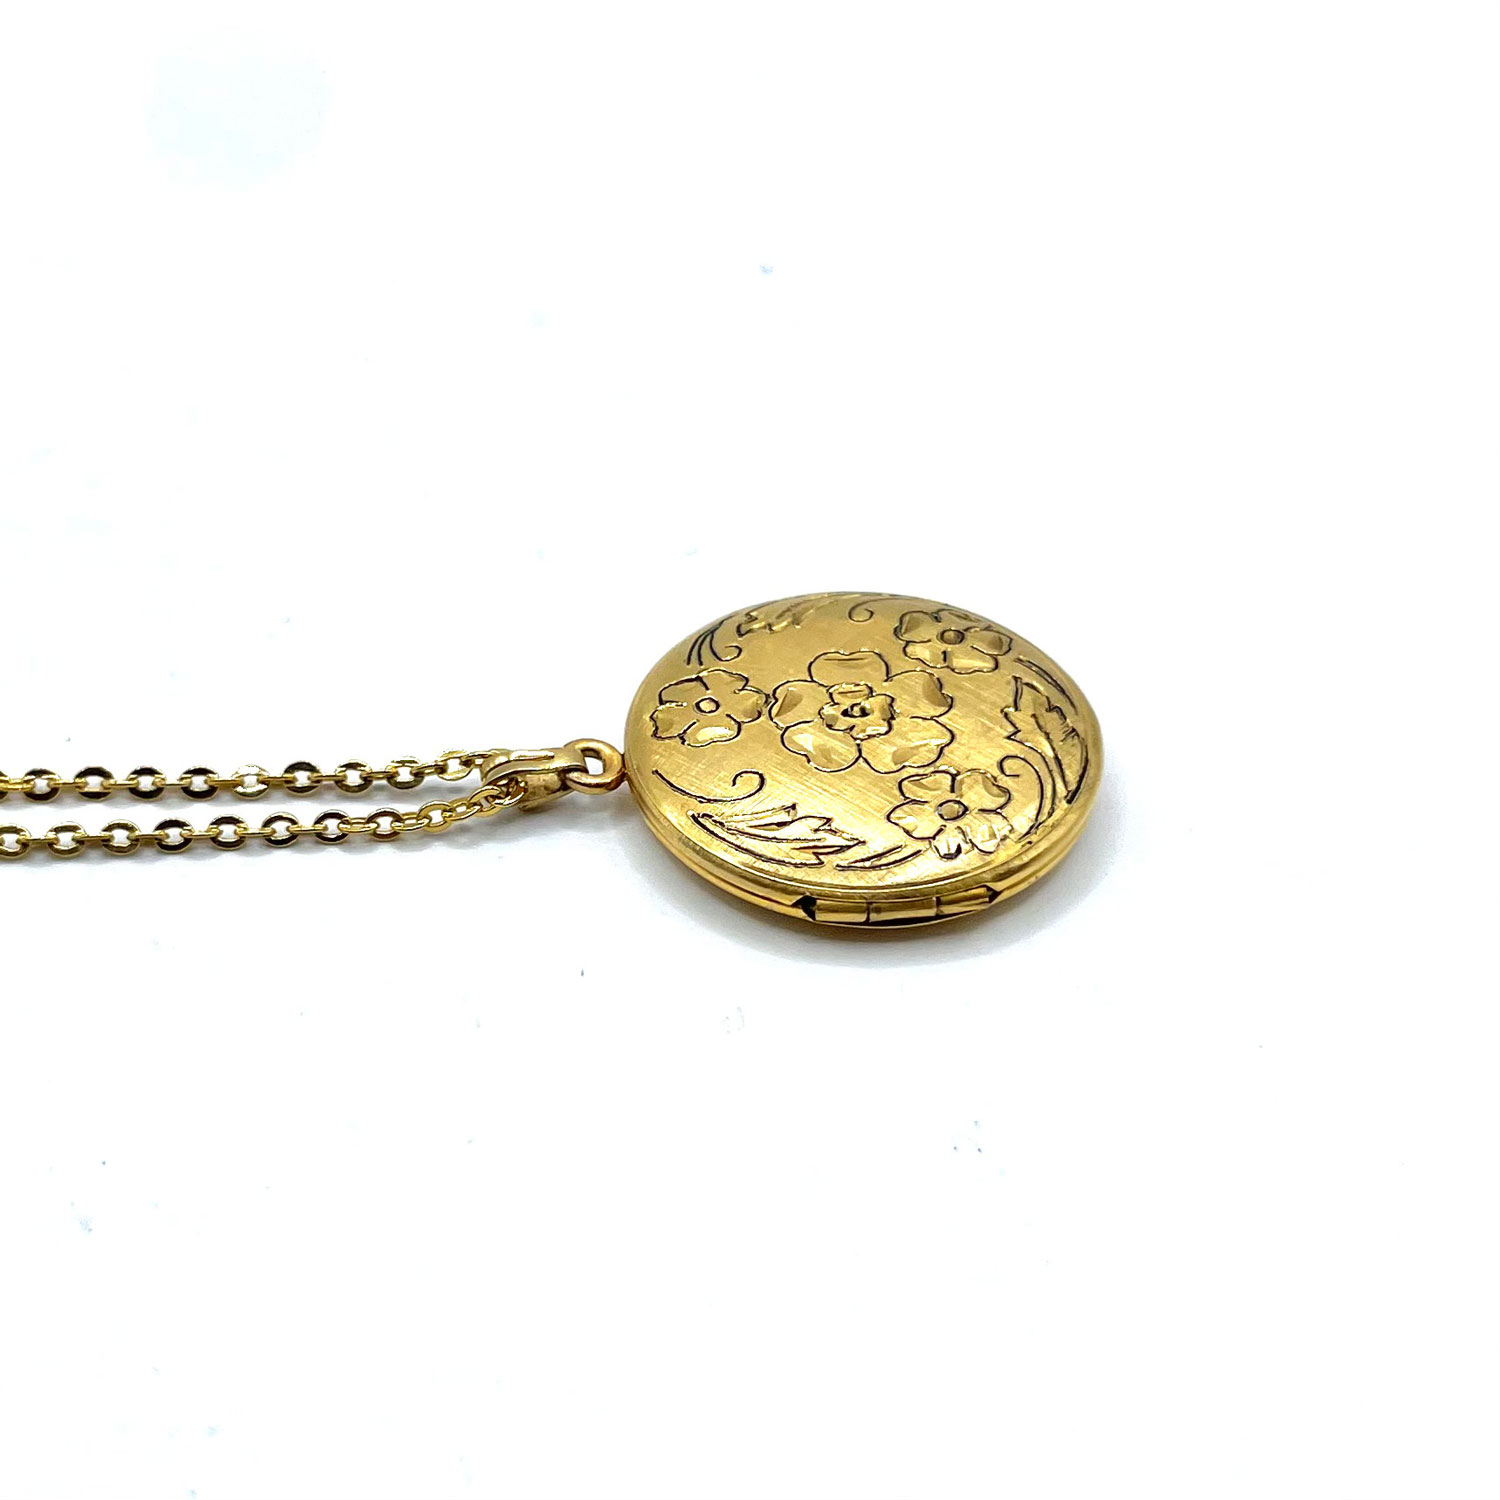 Floral etched locket pendant necklace